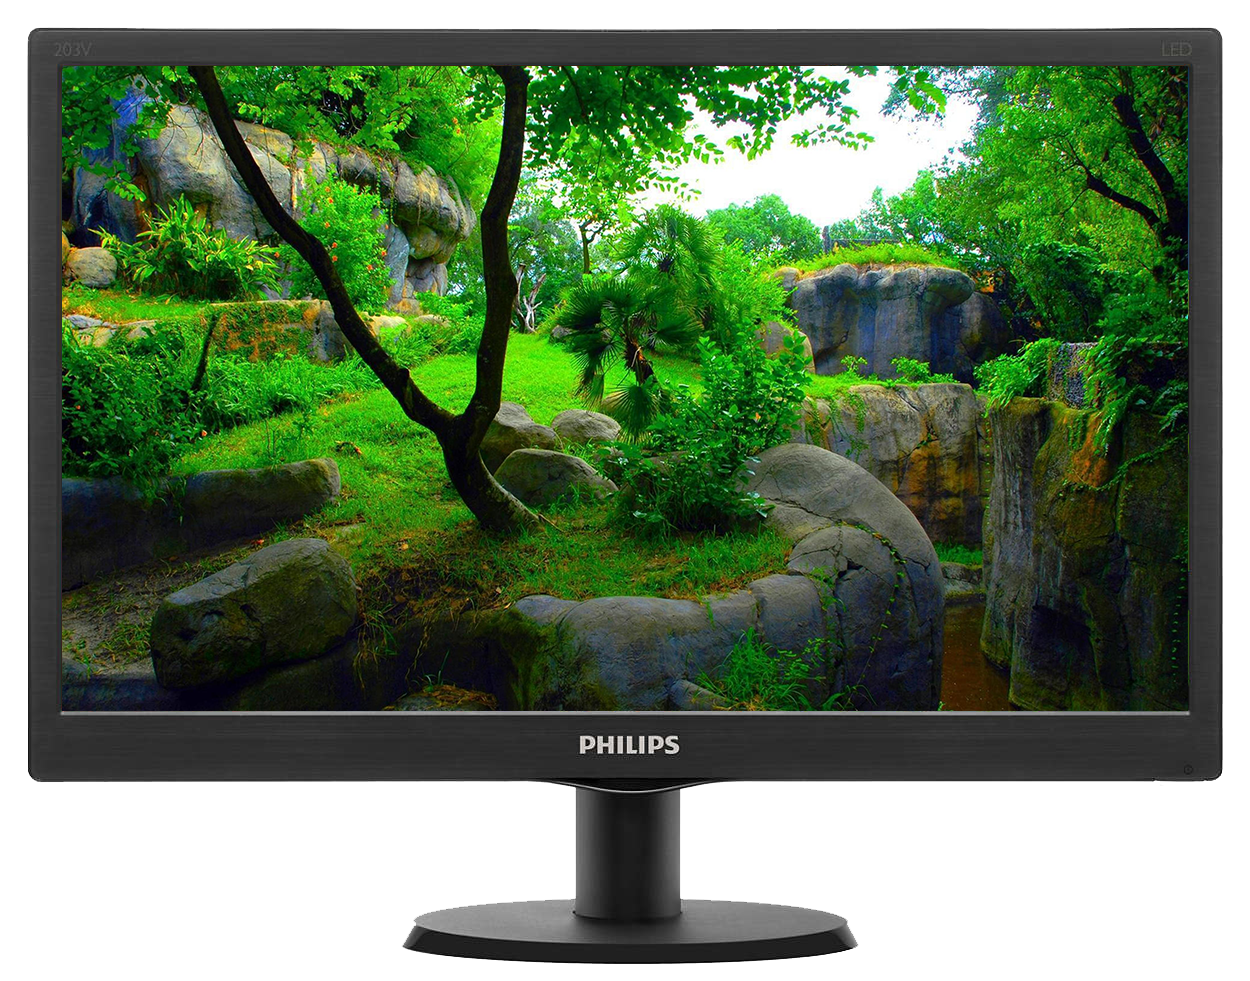 Philips 19.5" 203v5lsb LCD monitor